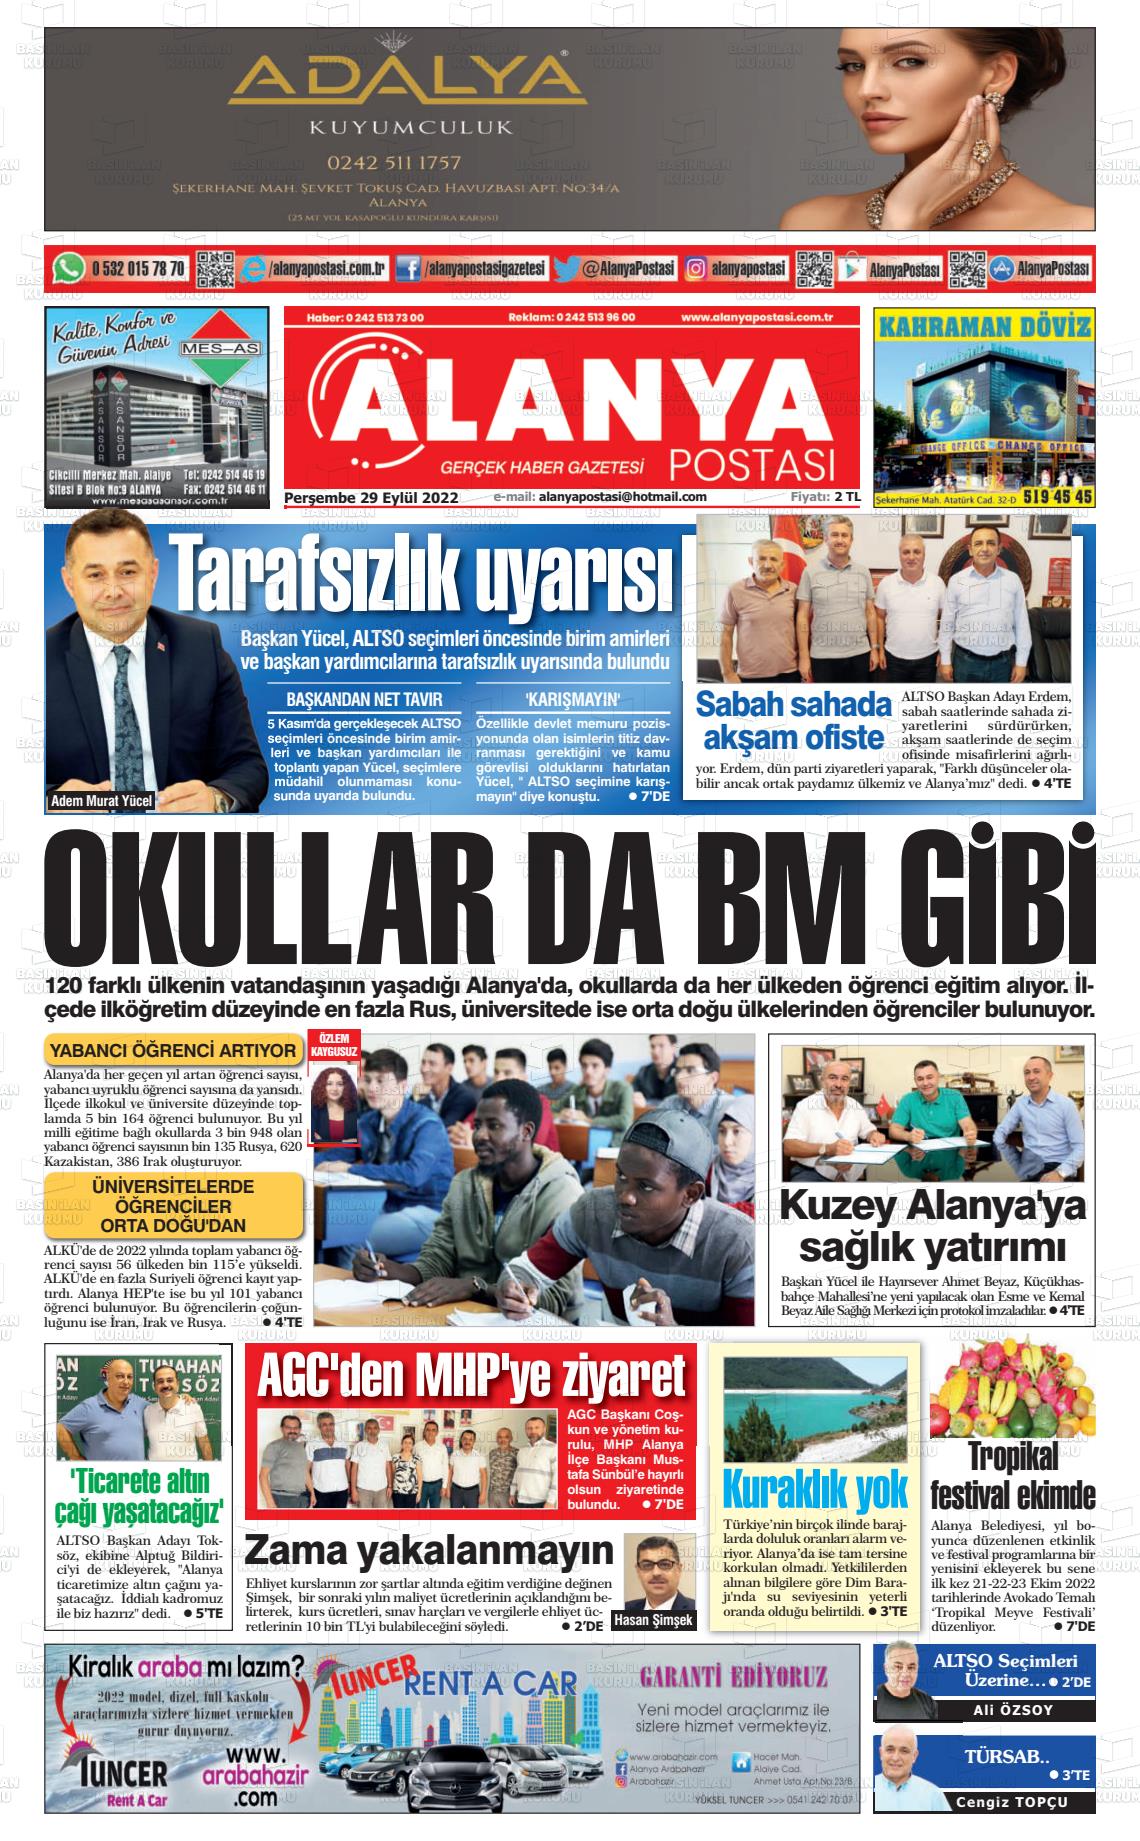 29 Eylül 2022 Alanya Postası Gazete Manşeti